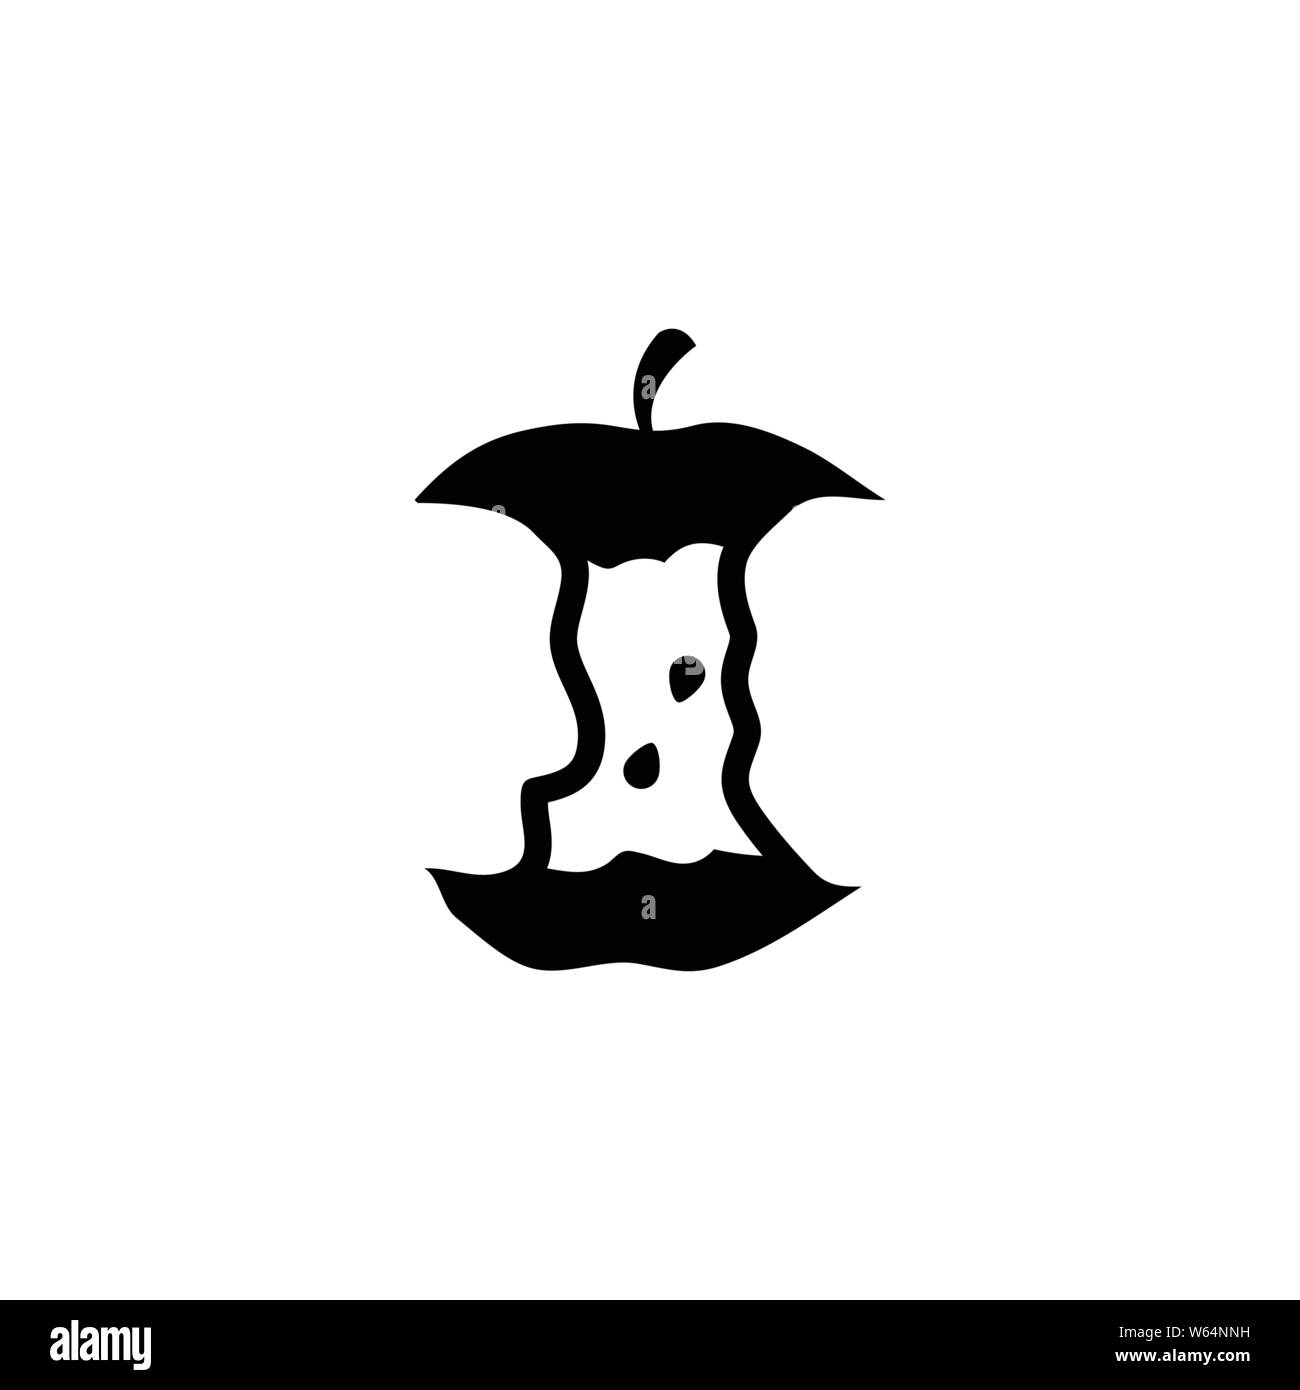 Apple Stub, Stump. Flat Vector Icon illustration. Simple black symbol on white background. Apple Stub, Stump sign design template for web and mobile U Stock Vector